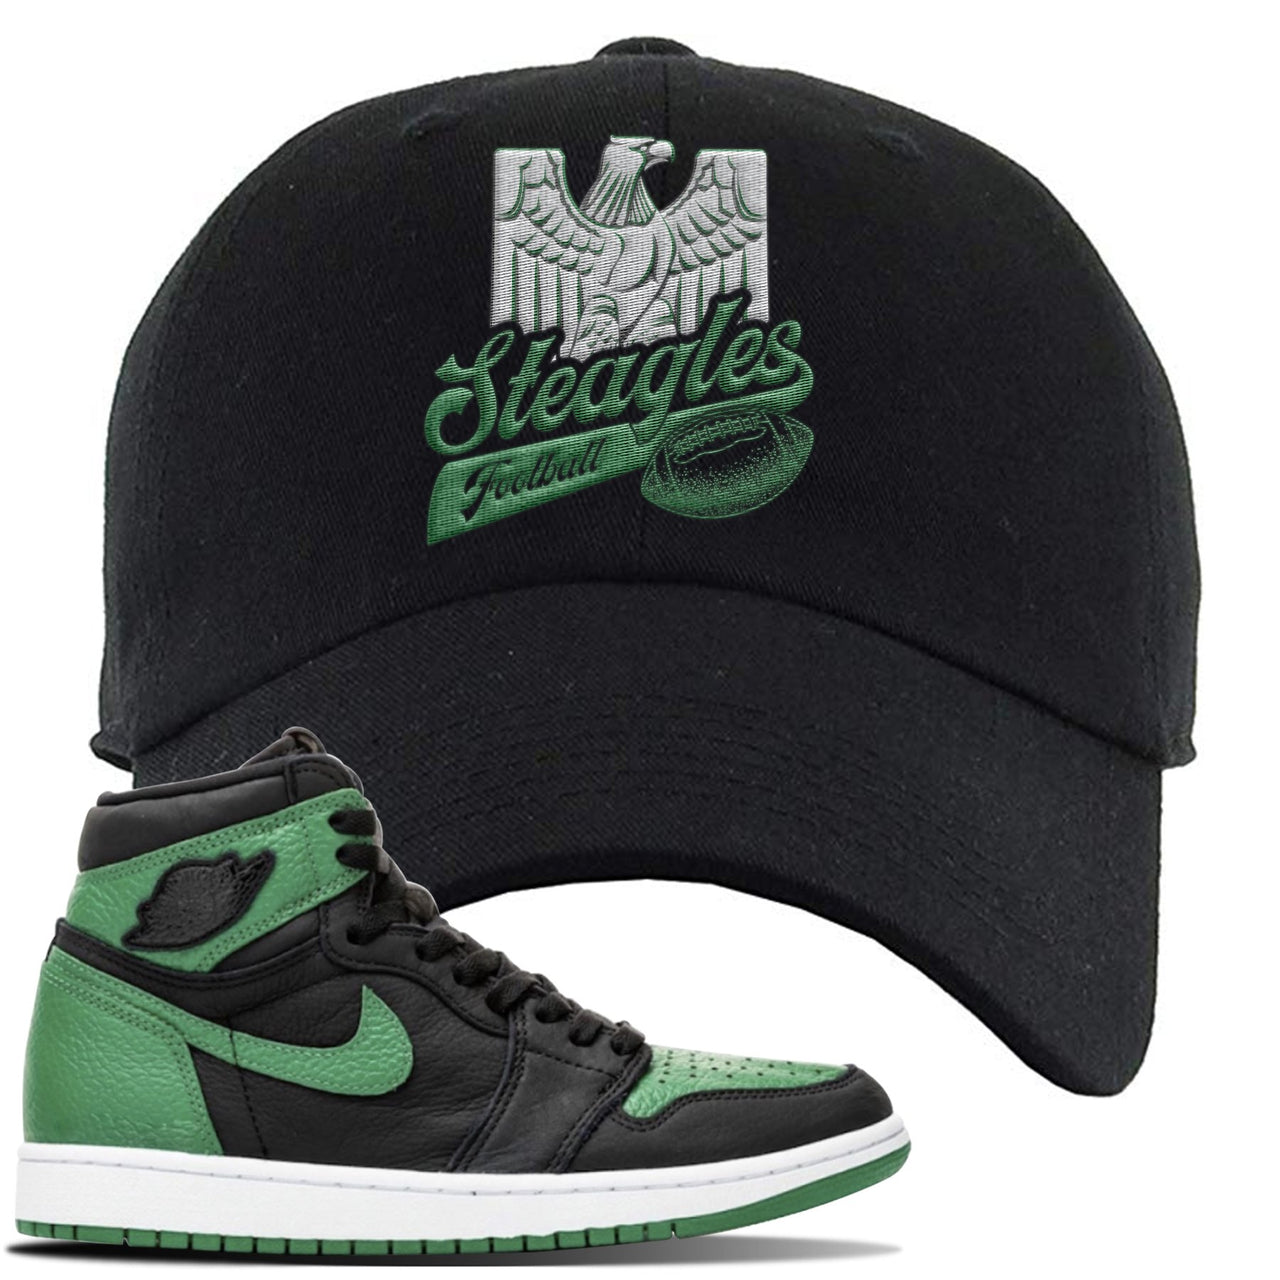 Jordan 1 Retro High OG Pine Green Gym Sneaker Black Dad Hat | Hat to match Air Jordan 1 Retro High OG Pine Green Gym Shoes | Steagles